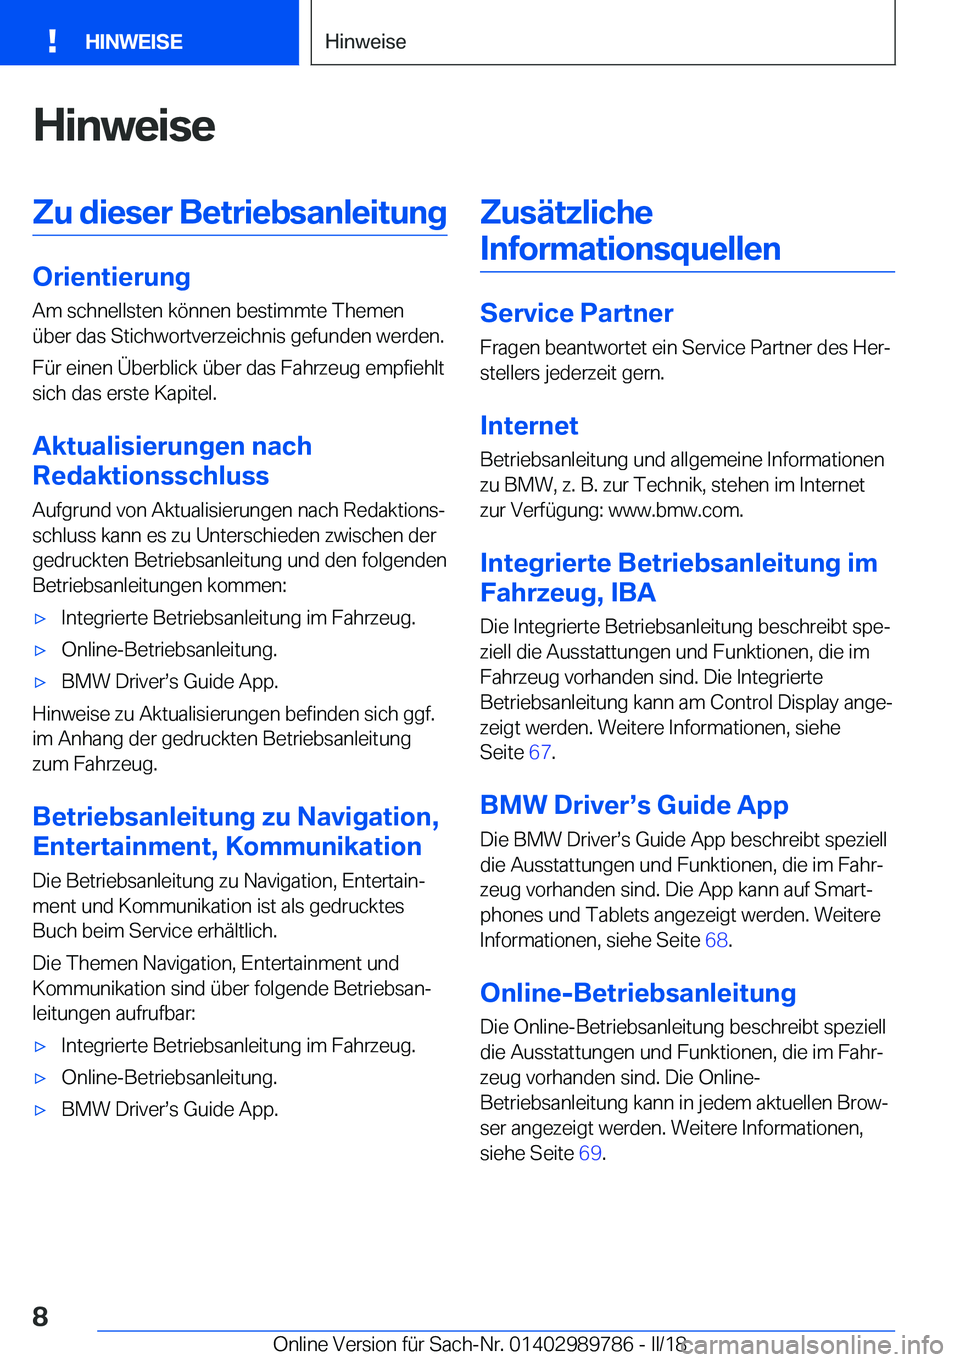 BMW M5 2018  Betriebsanleitungen (in German) �H�i�n�w�e�i�s�e�Z�u��d�i�e�s�e�r��B�e�t�r�i�e�b�s�a�n�l�e�i�t�u�n�g
�O�r�i�e�n�t�i�e�r�u�n�g�A�m� �s�c�h�n�e�l�l�s�t�e�n� �k�ö�n�n�e�n� �b�e�s�t�i�m�m�t�e� �T�h�e�m�e�n
�ü�b�e�r� �d�a�s� �S�t�i�c